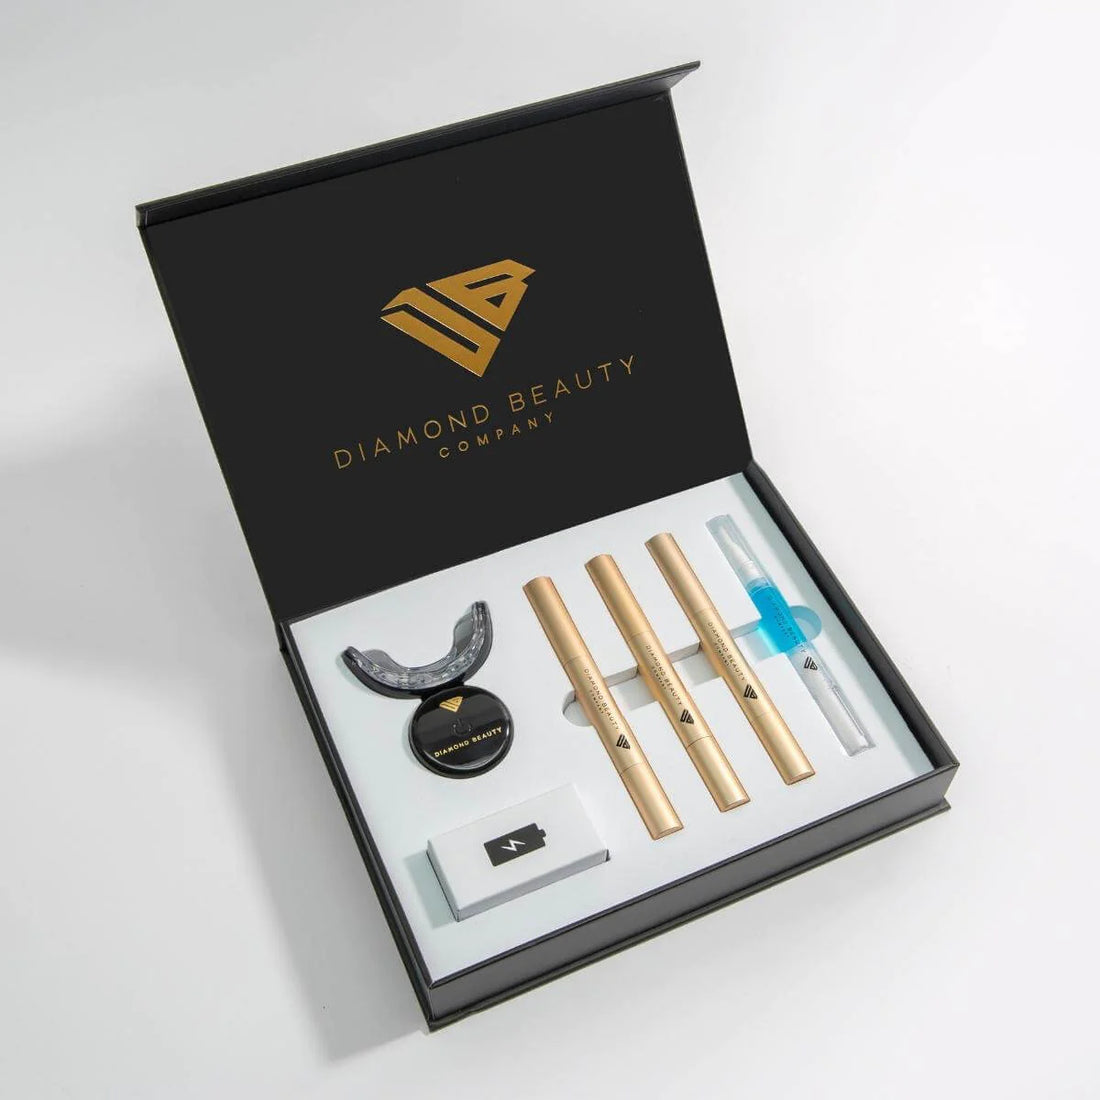 Diamond Beauty's Teeth Whitening Kit and Desensitizing Gel Pen for No-Sensitivity Teeth Whitening